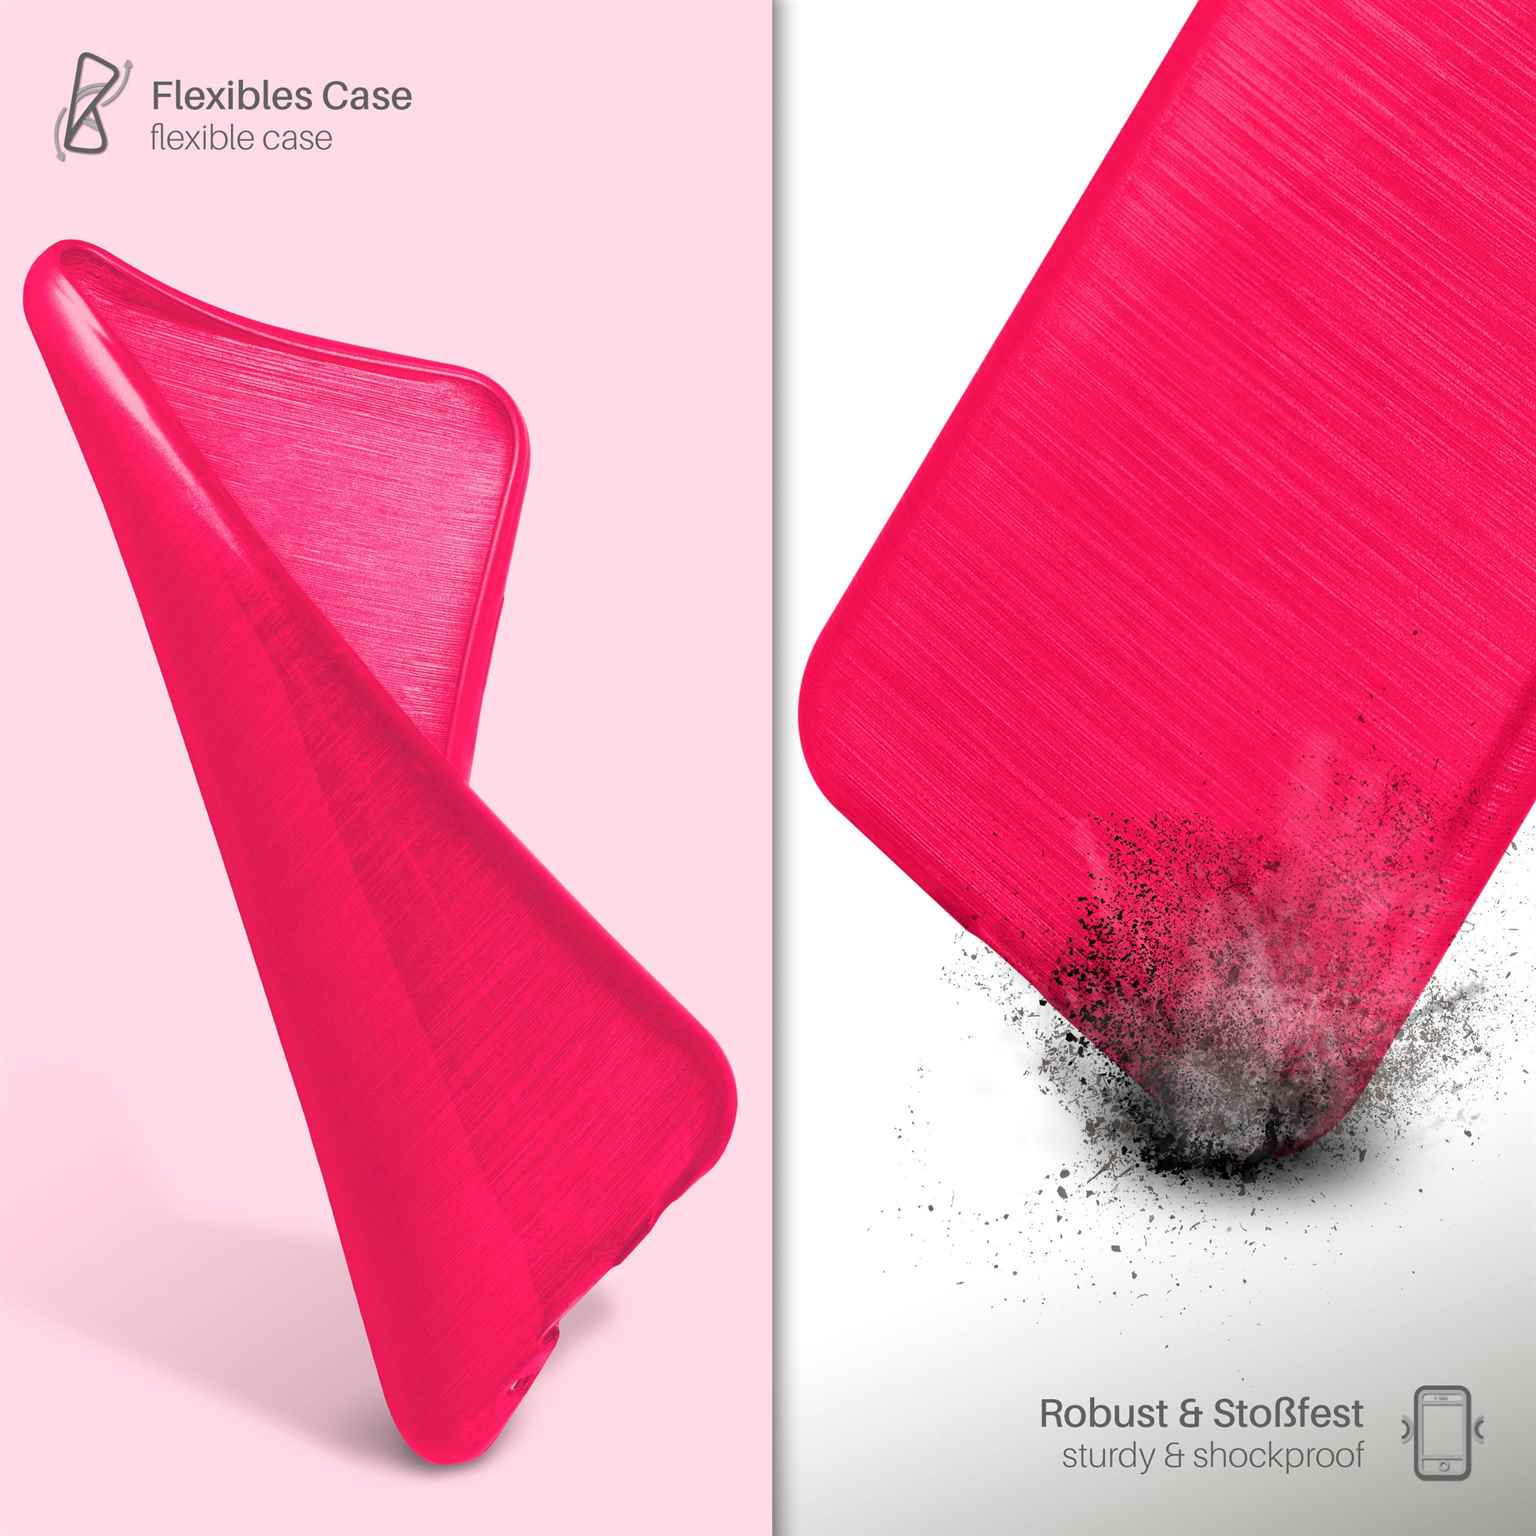 Backcover, Case, MOEX iPhone Brushed 6, Magenta-Pink Apple,